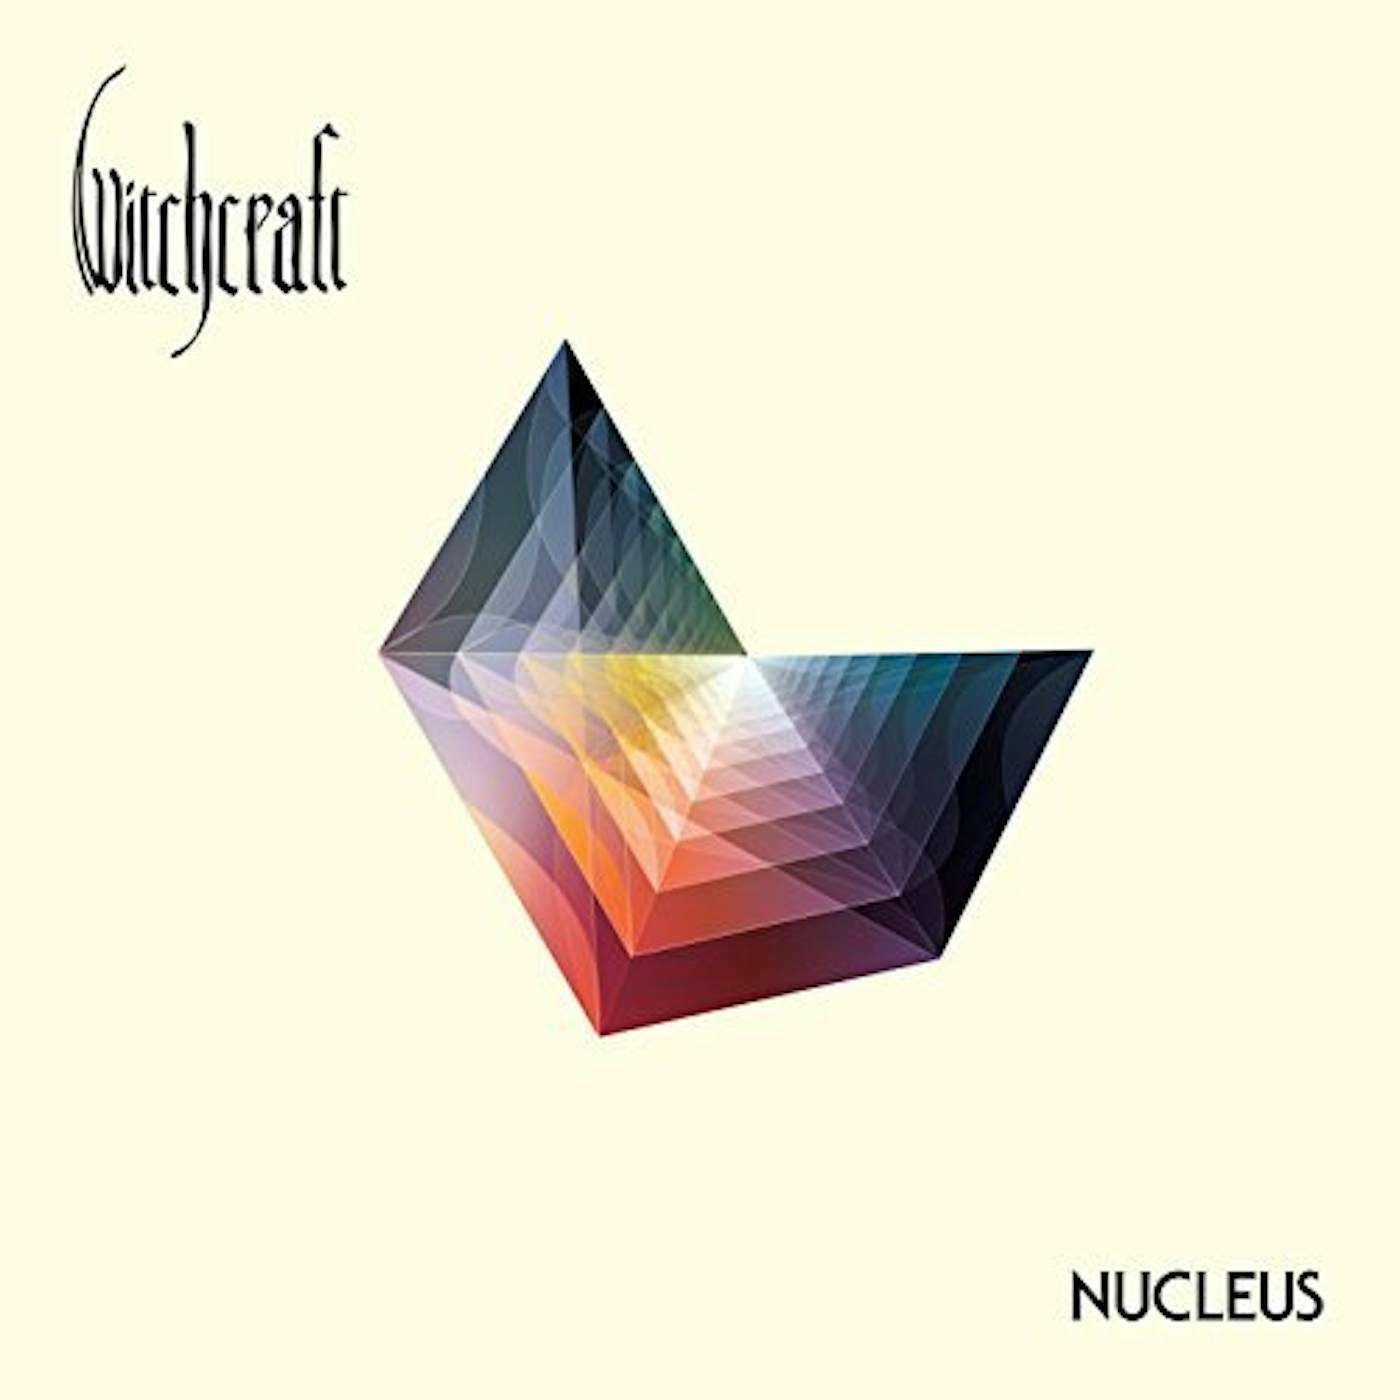 Witchcraft Nucleus Vinyl Record